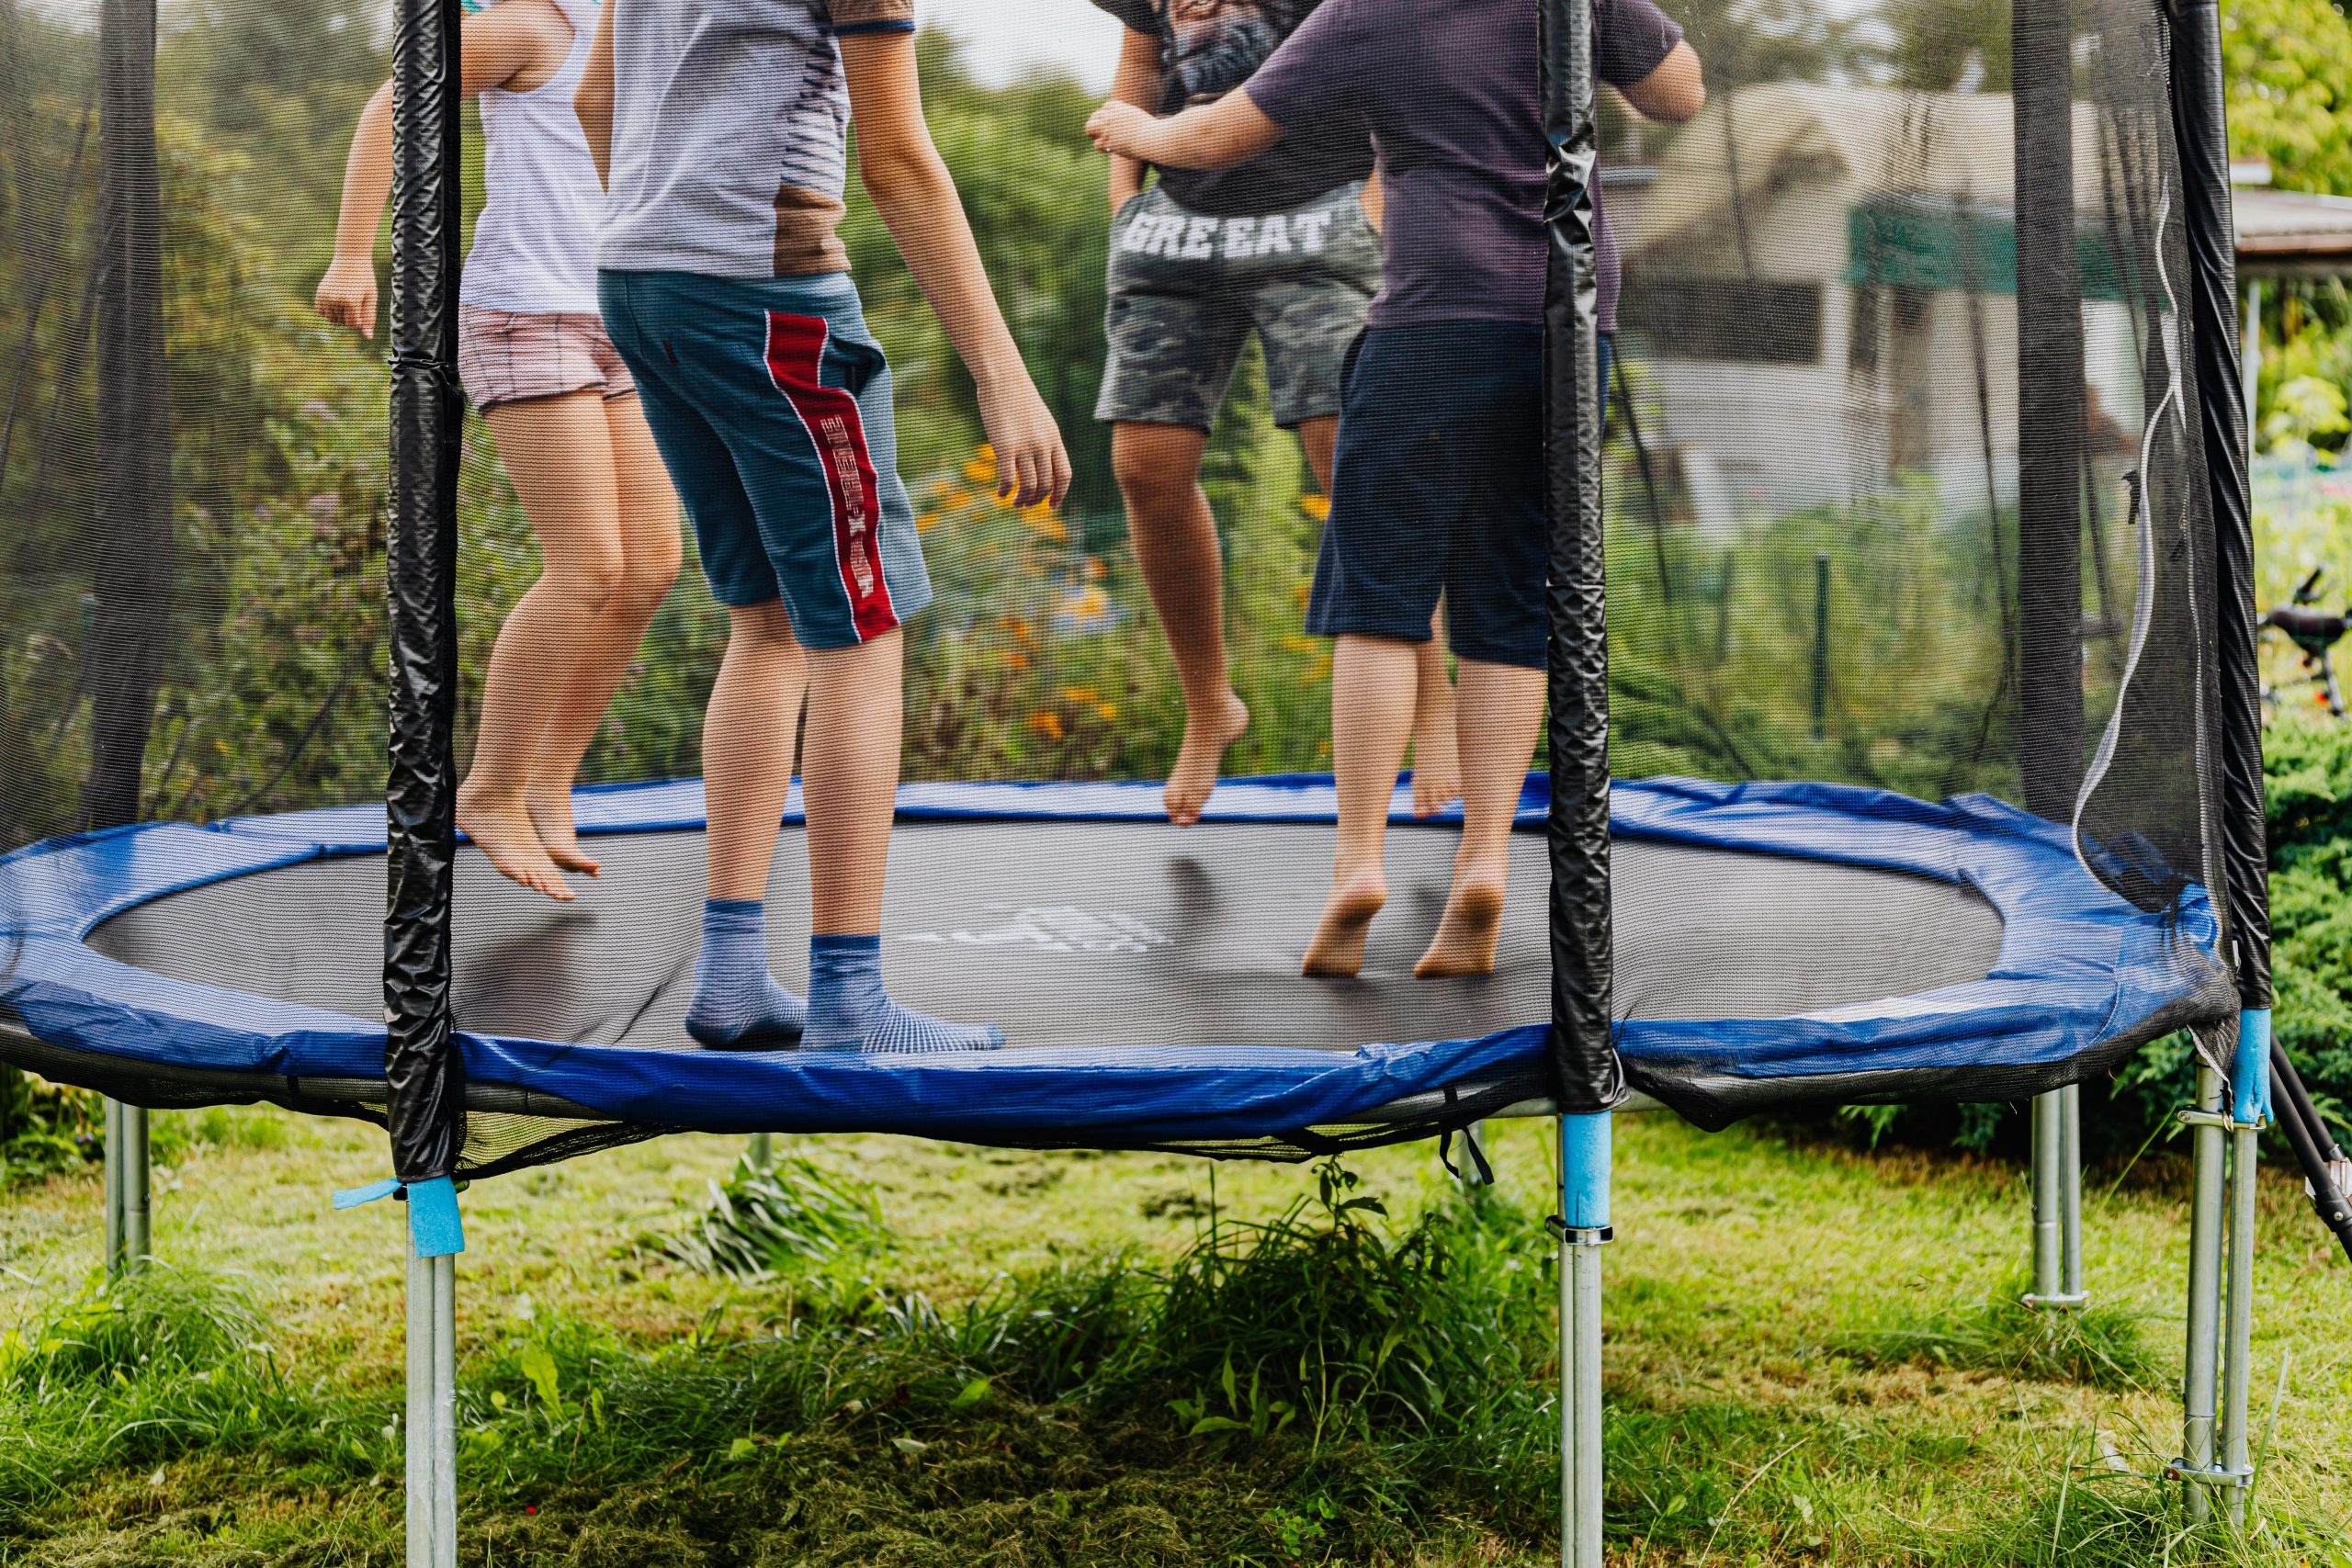 Trampolining: A backyard trampoline, A recreational outdoor activity and an active sport. 2560x1710 HD Wallpaper.